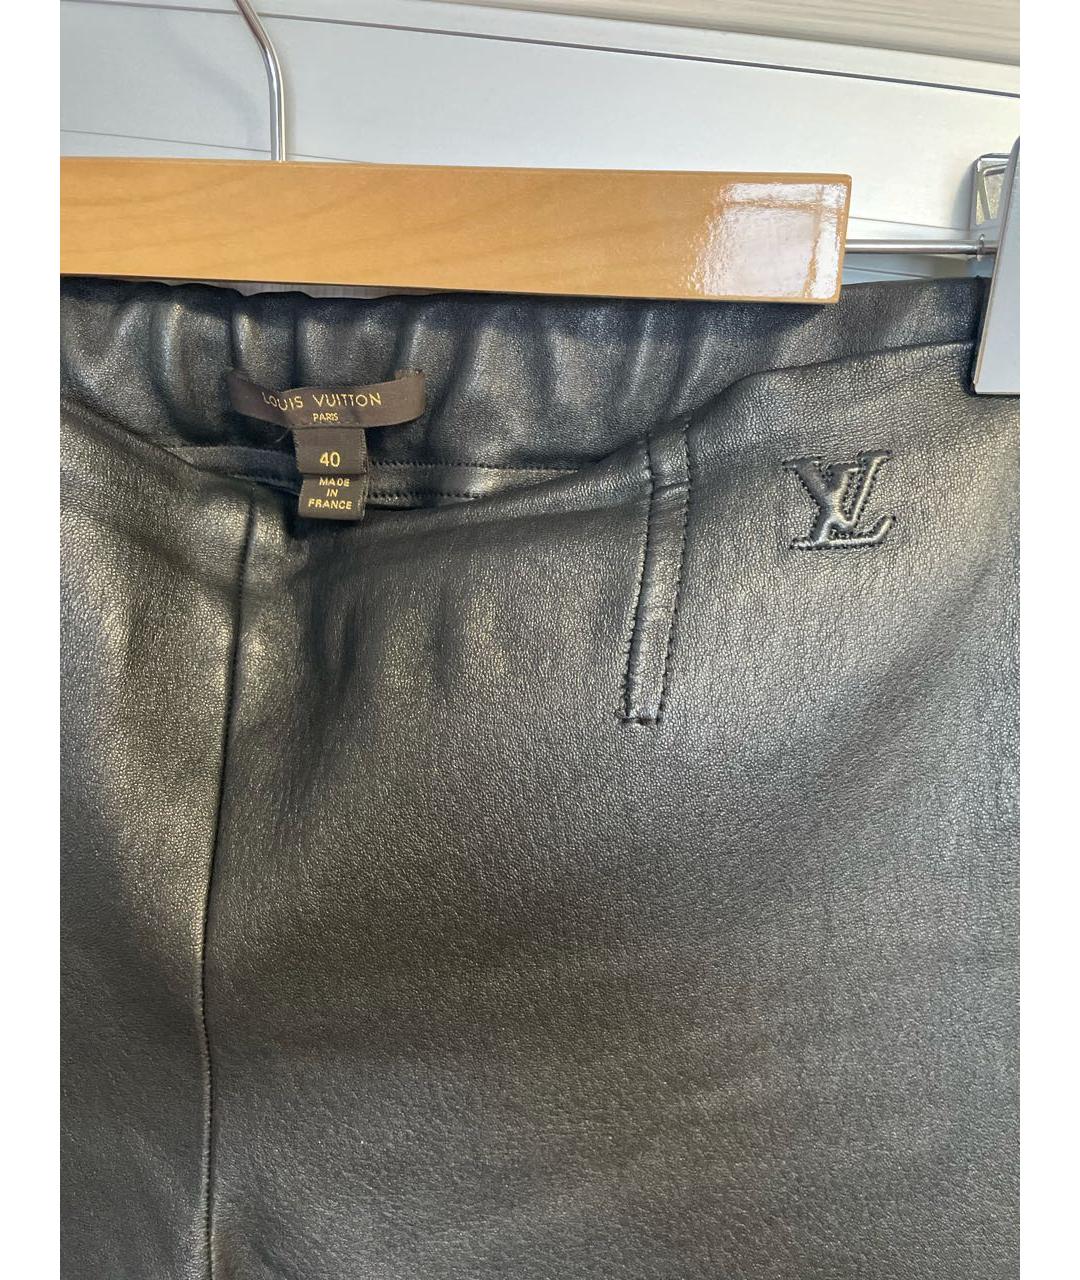 LOUIS VUITTON PRE-OWNED Черные кожаные брюки узкие, фото 2